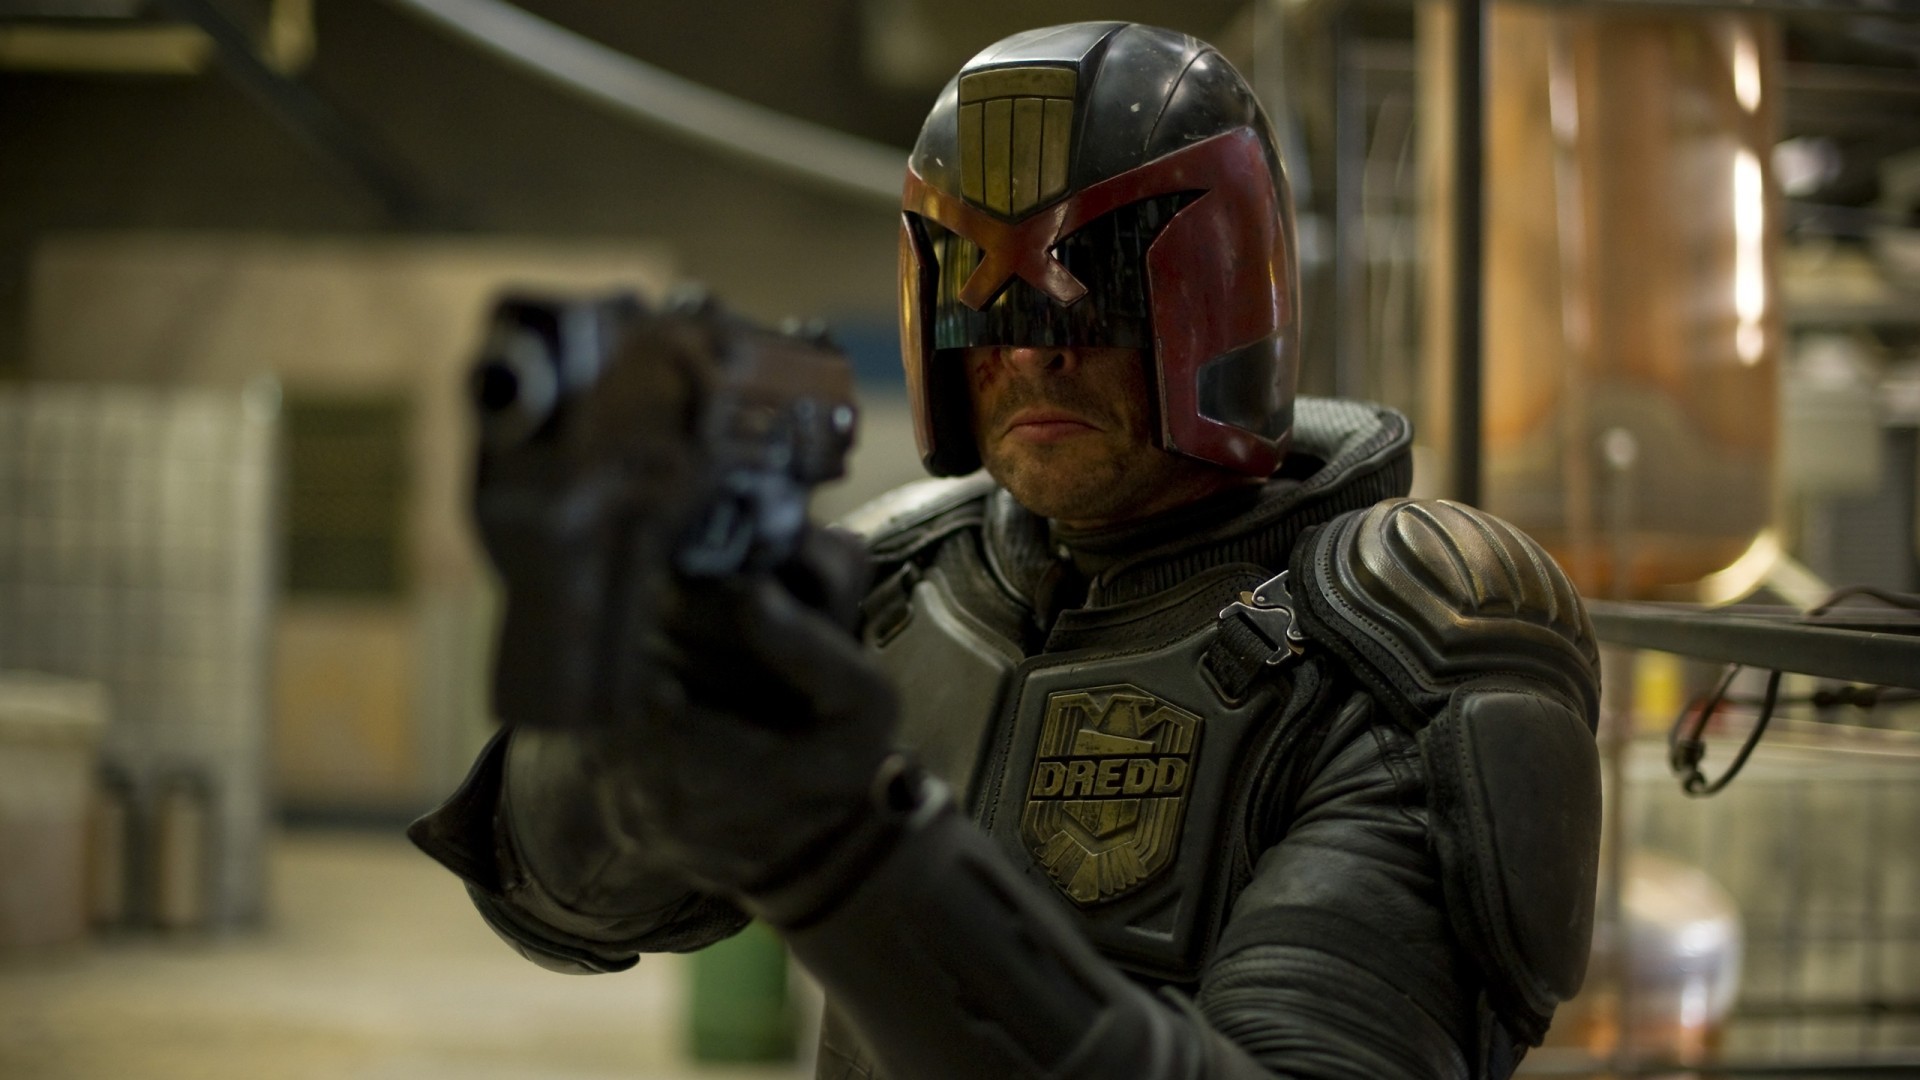 General 1920x1080 Dredd Judge Dredd movies weapon Science Fiction Men science fiction helmet men film stills Karl Urban